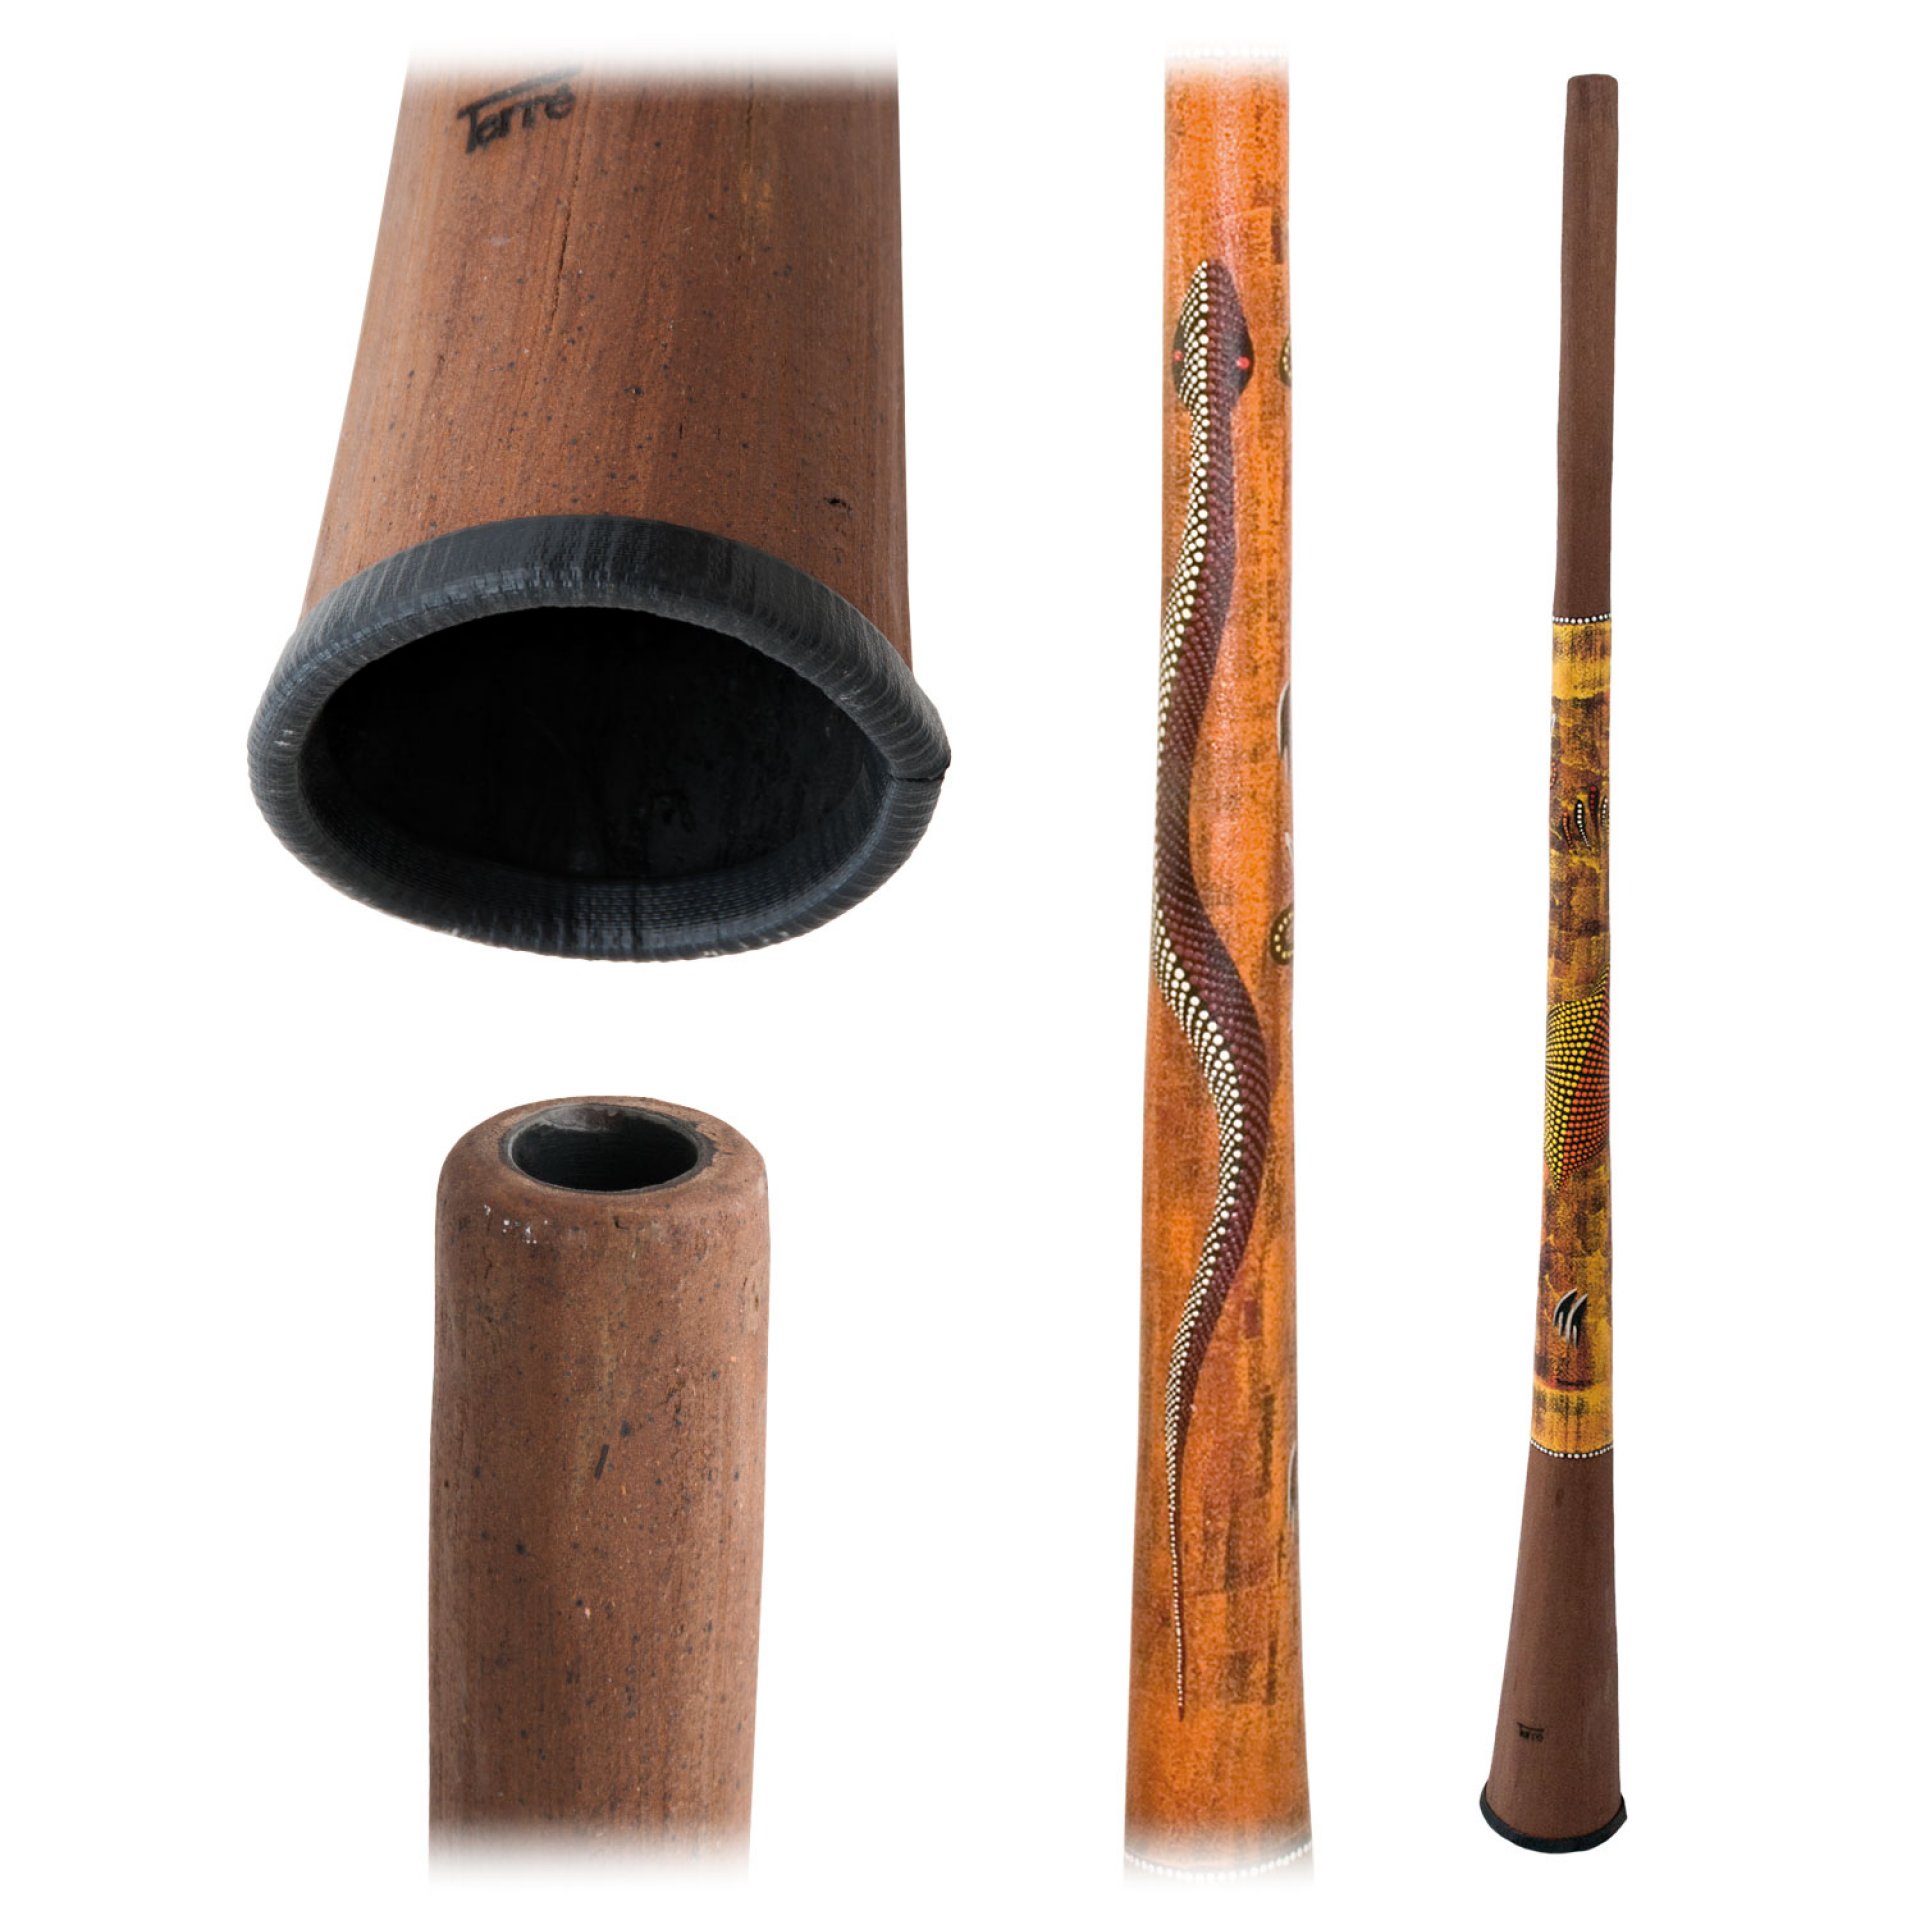 Baked wood Didgeridoo